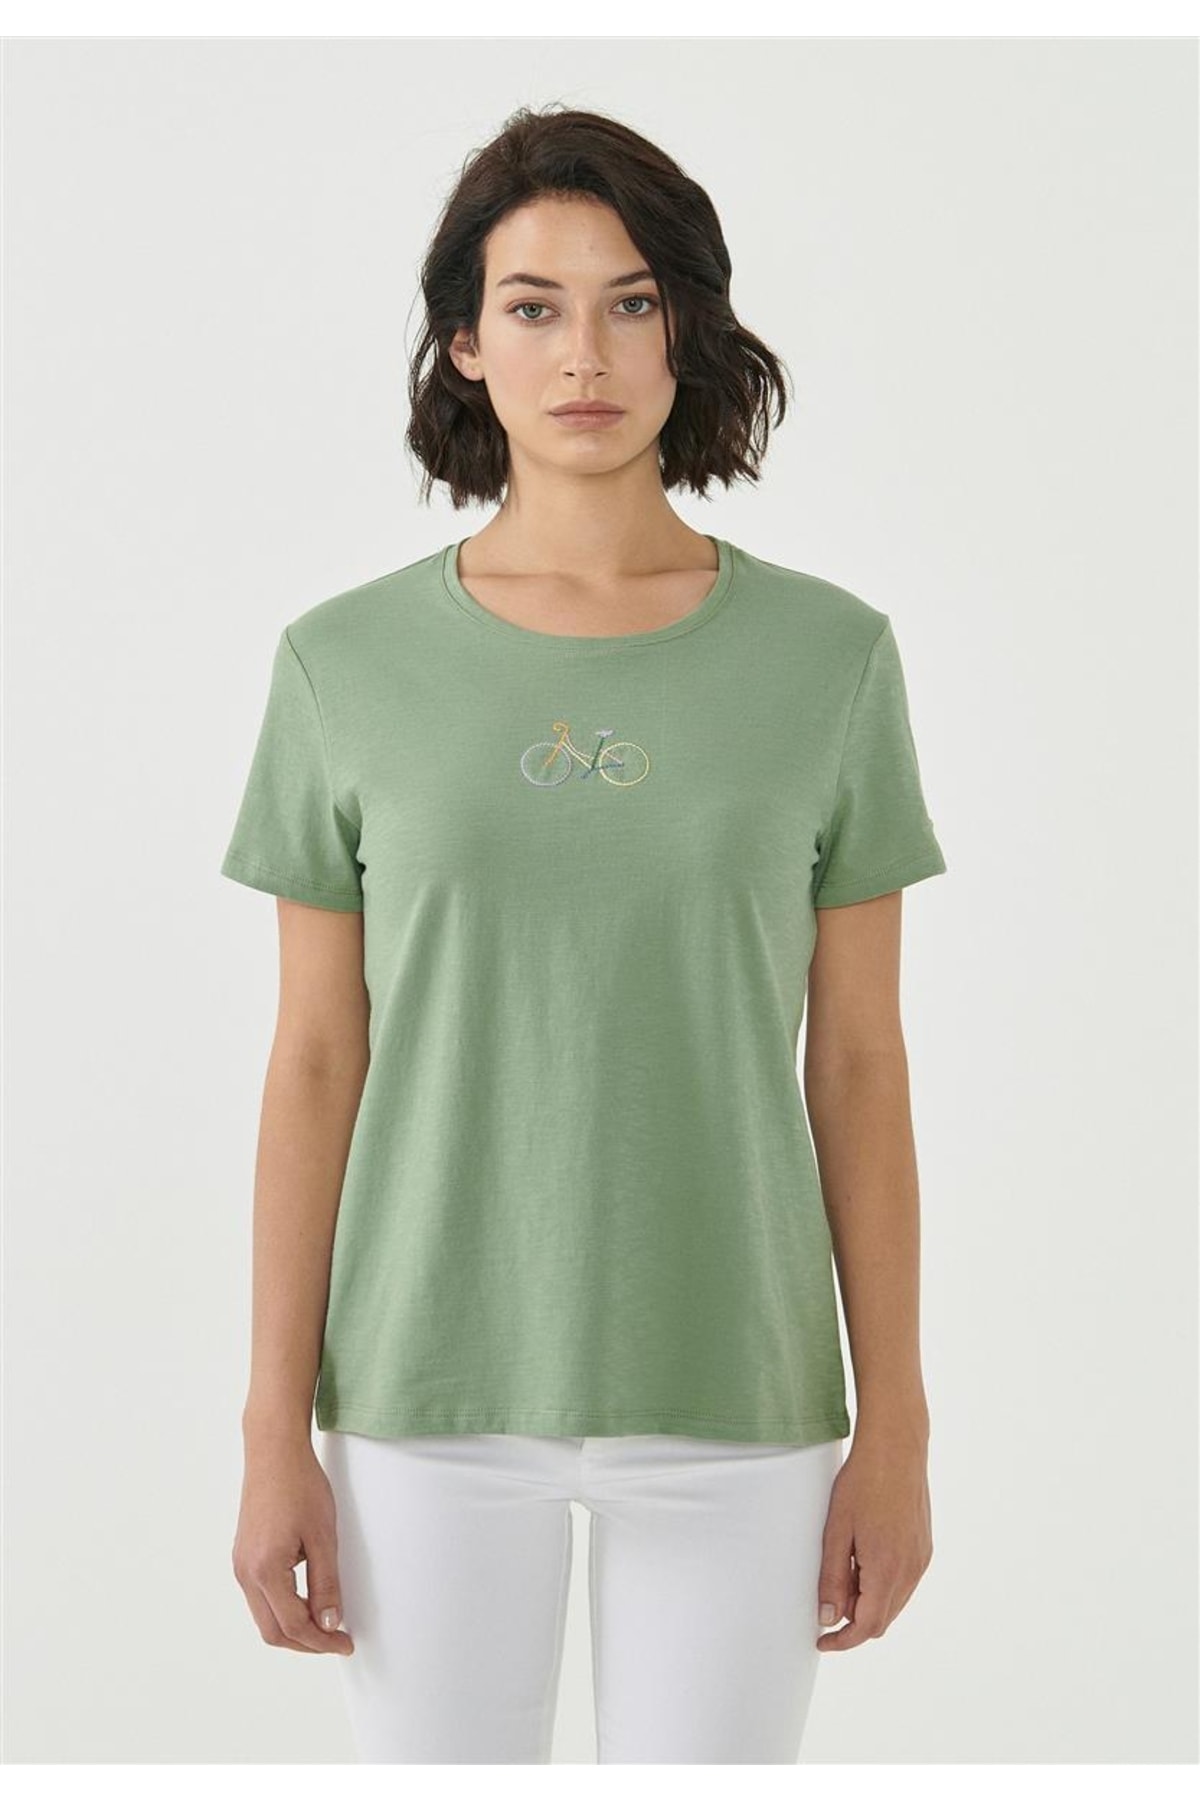 ORGANICATION T-Shirt Grün Figurbetont